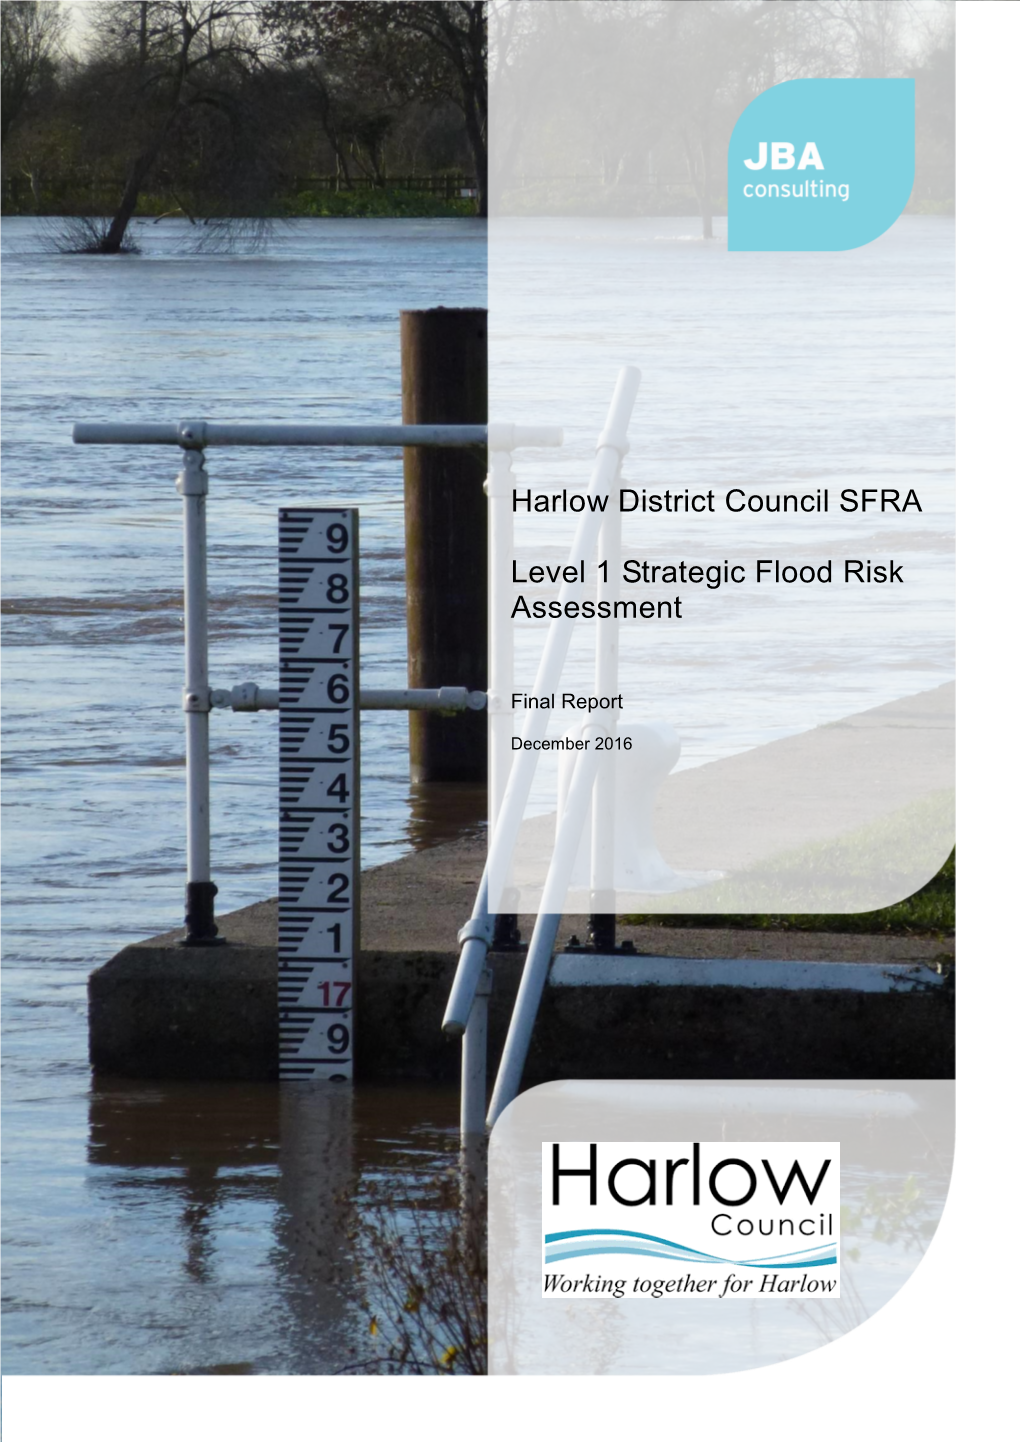 Harlow District Council SFRA Level 1 Strategic Flood Risk Assessment